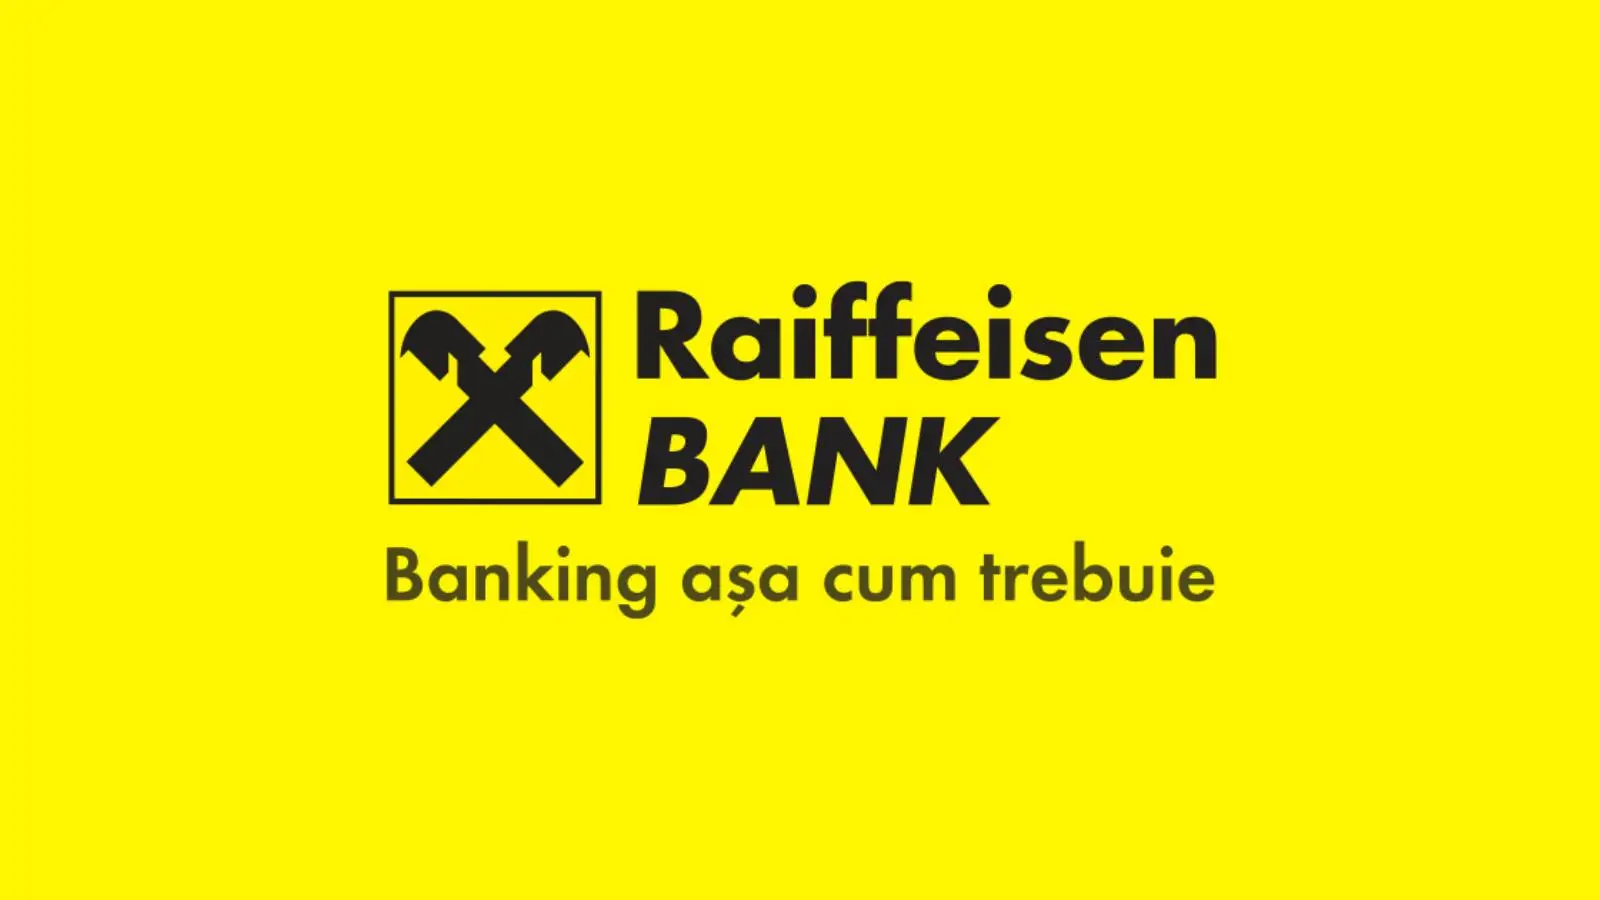 Raiffeisen Bank FREE 500 LEI Car Vouchers for Customers